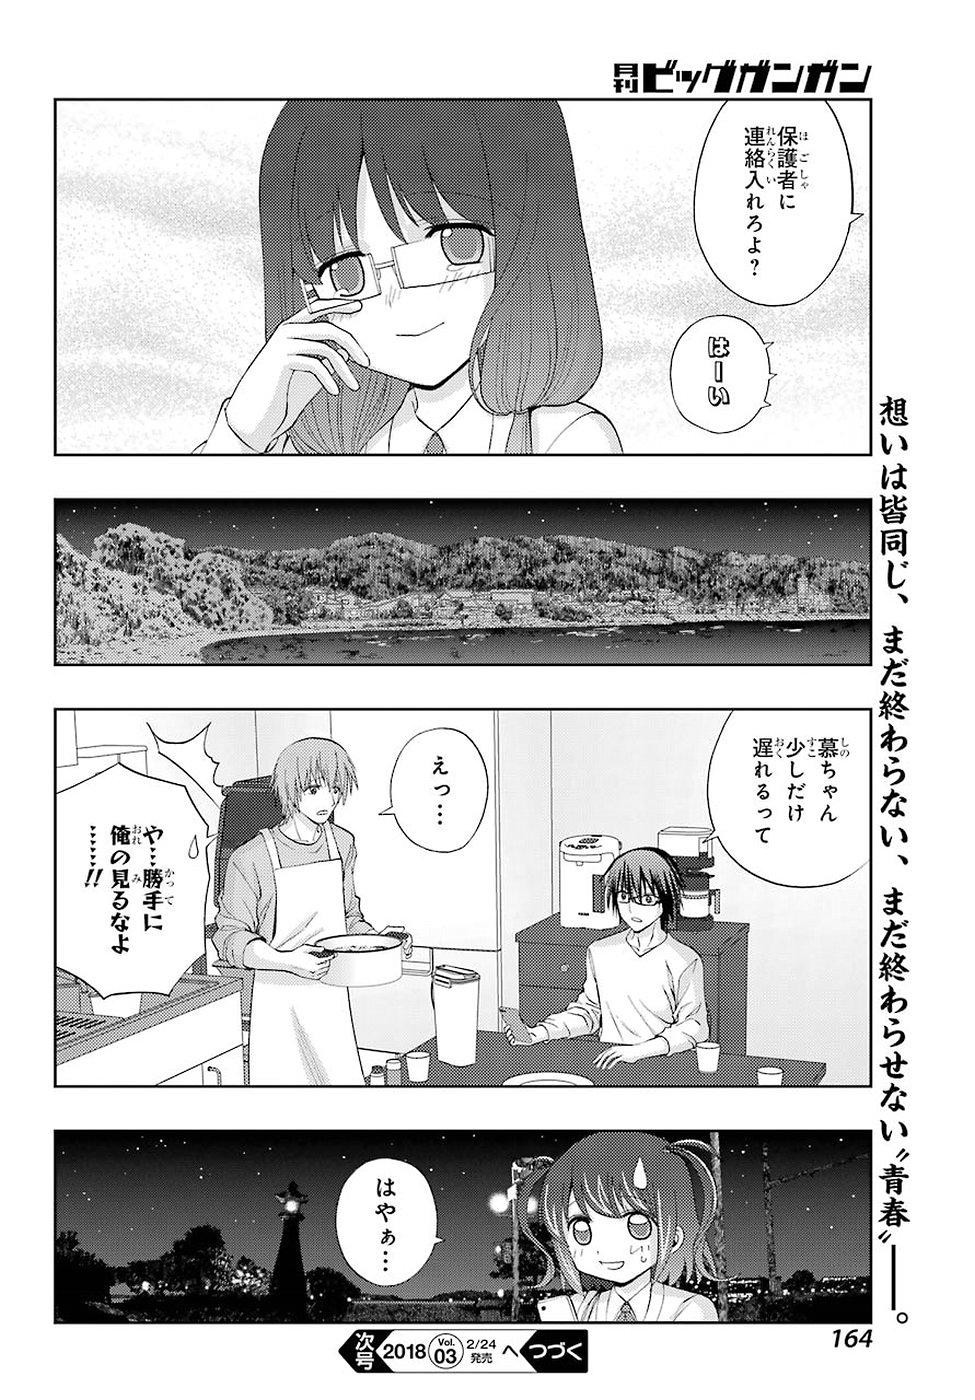 Shinohayu - The Dawn of Age Manga - Chapter 053 - Page 29